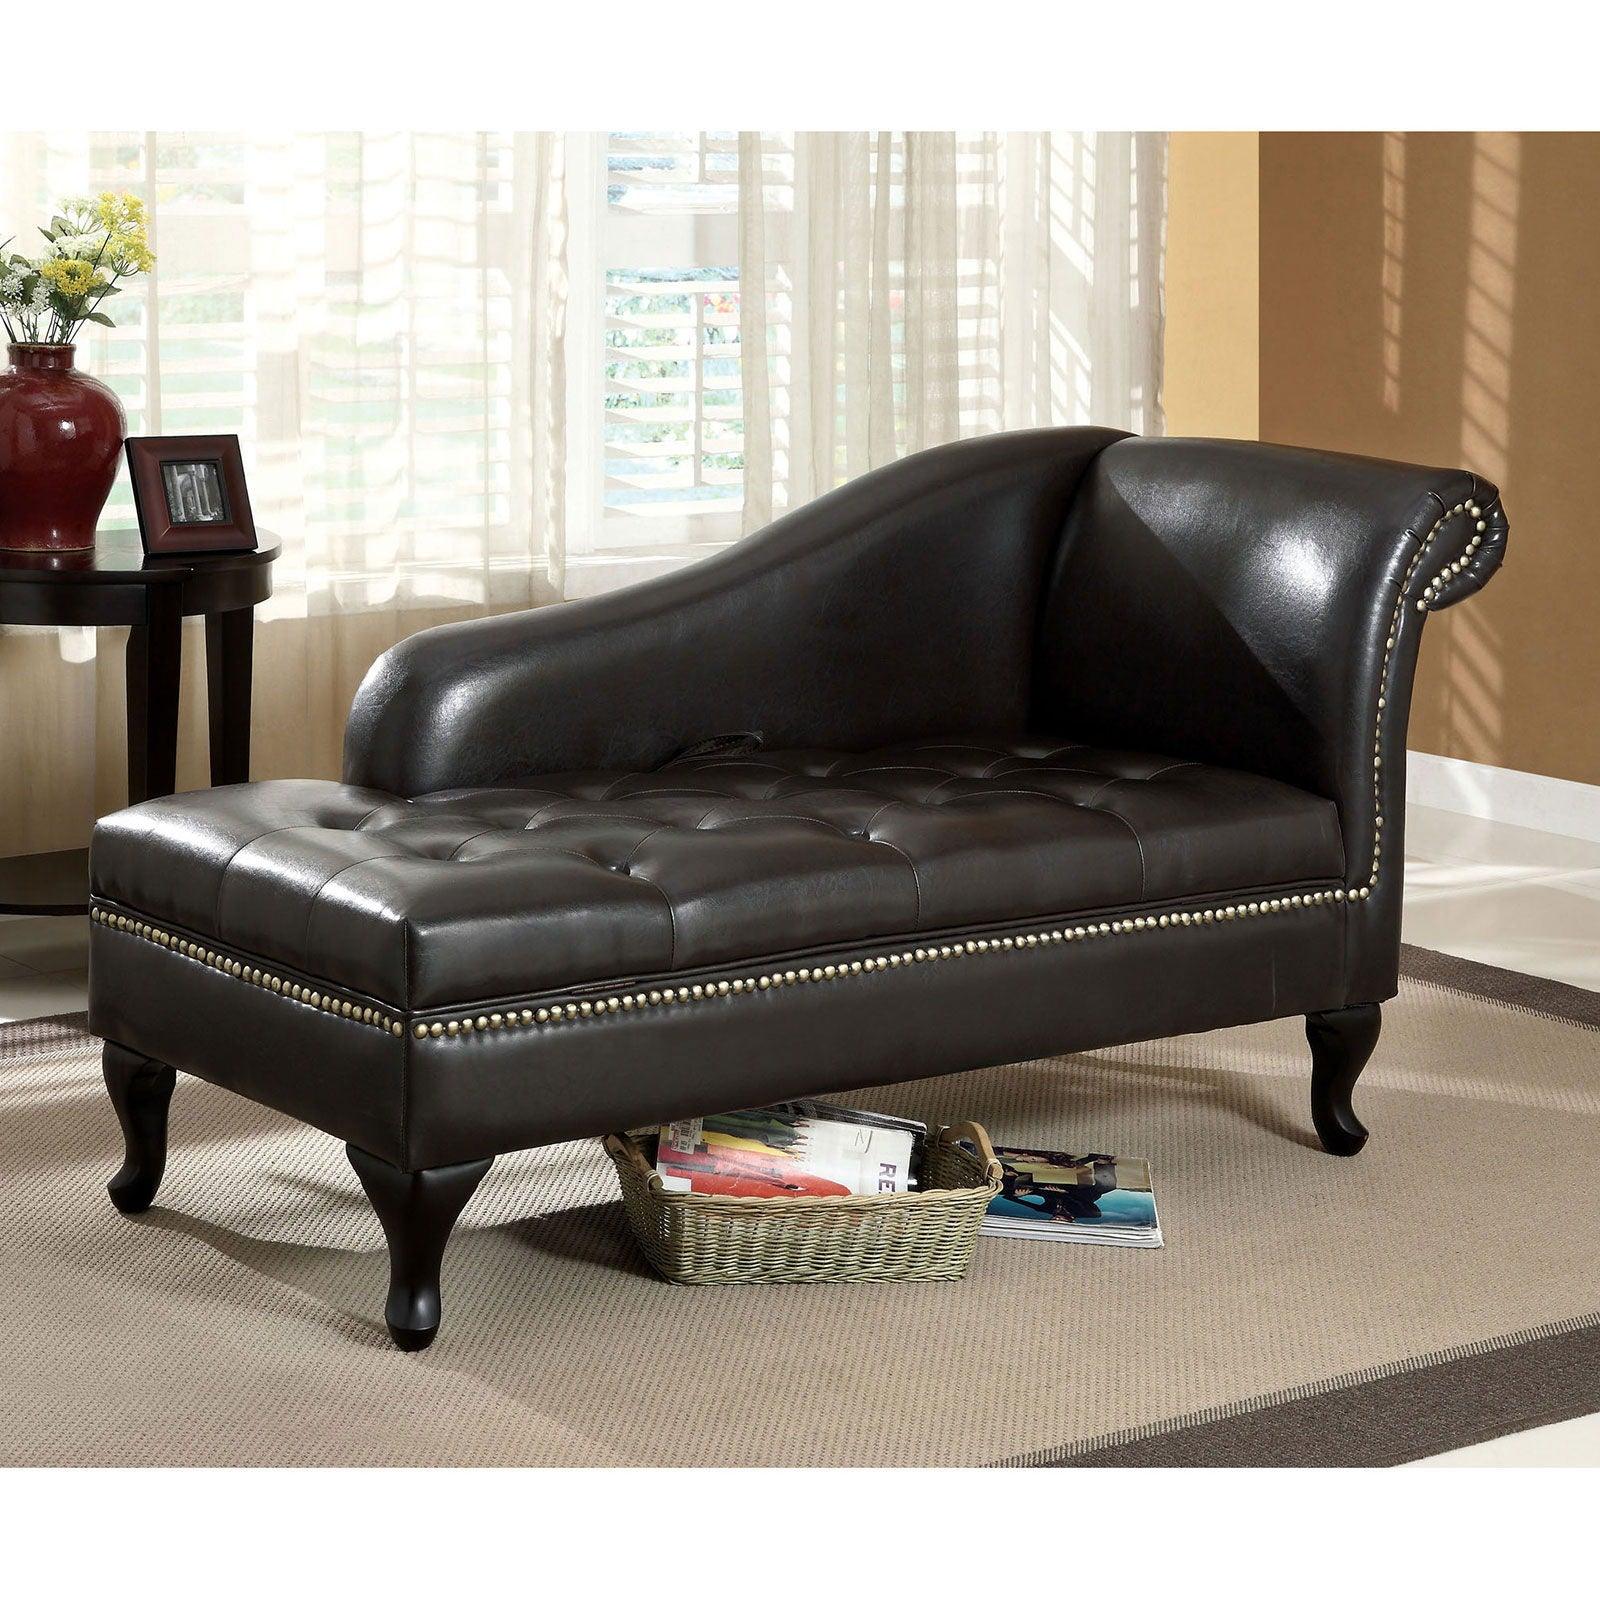 Furniture of America - Lakeport - Storage Chaise - Black - 5th Avenue Furniture